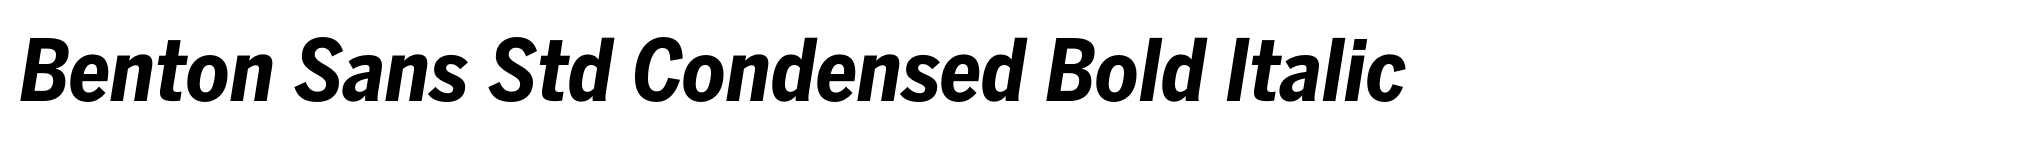 Benton Sans Std Condensed Bold Italic image